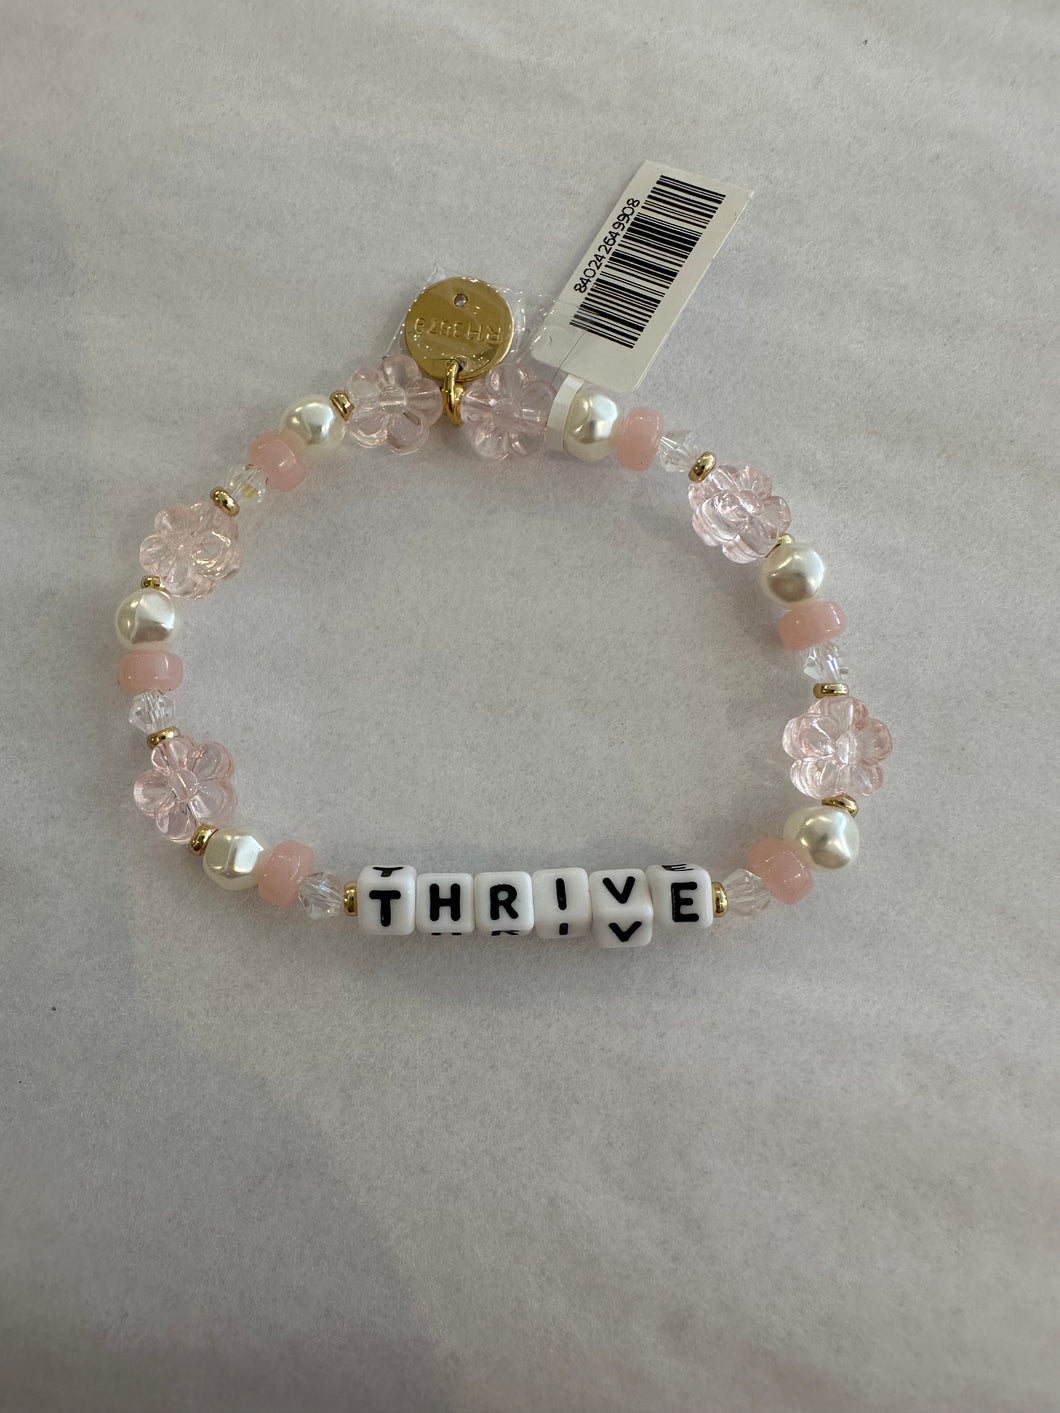 thrive bracelet